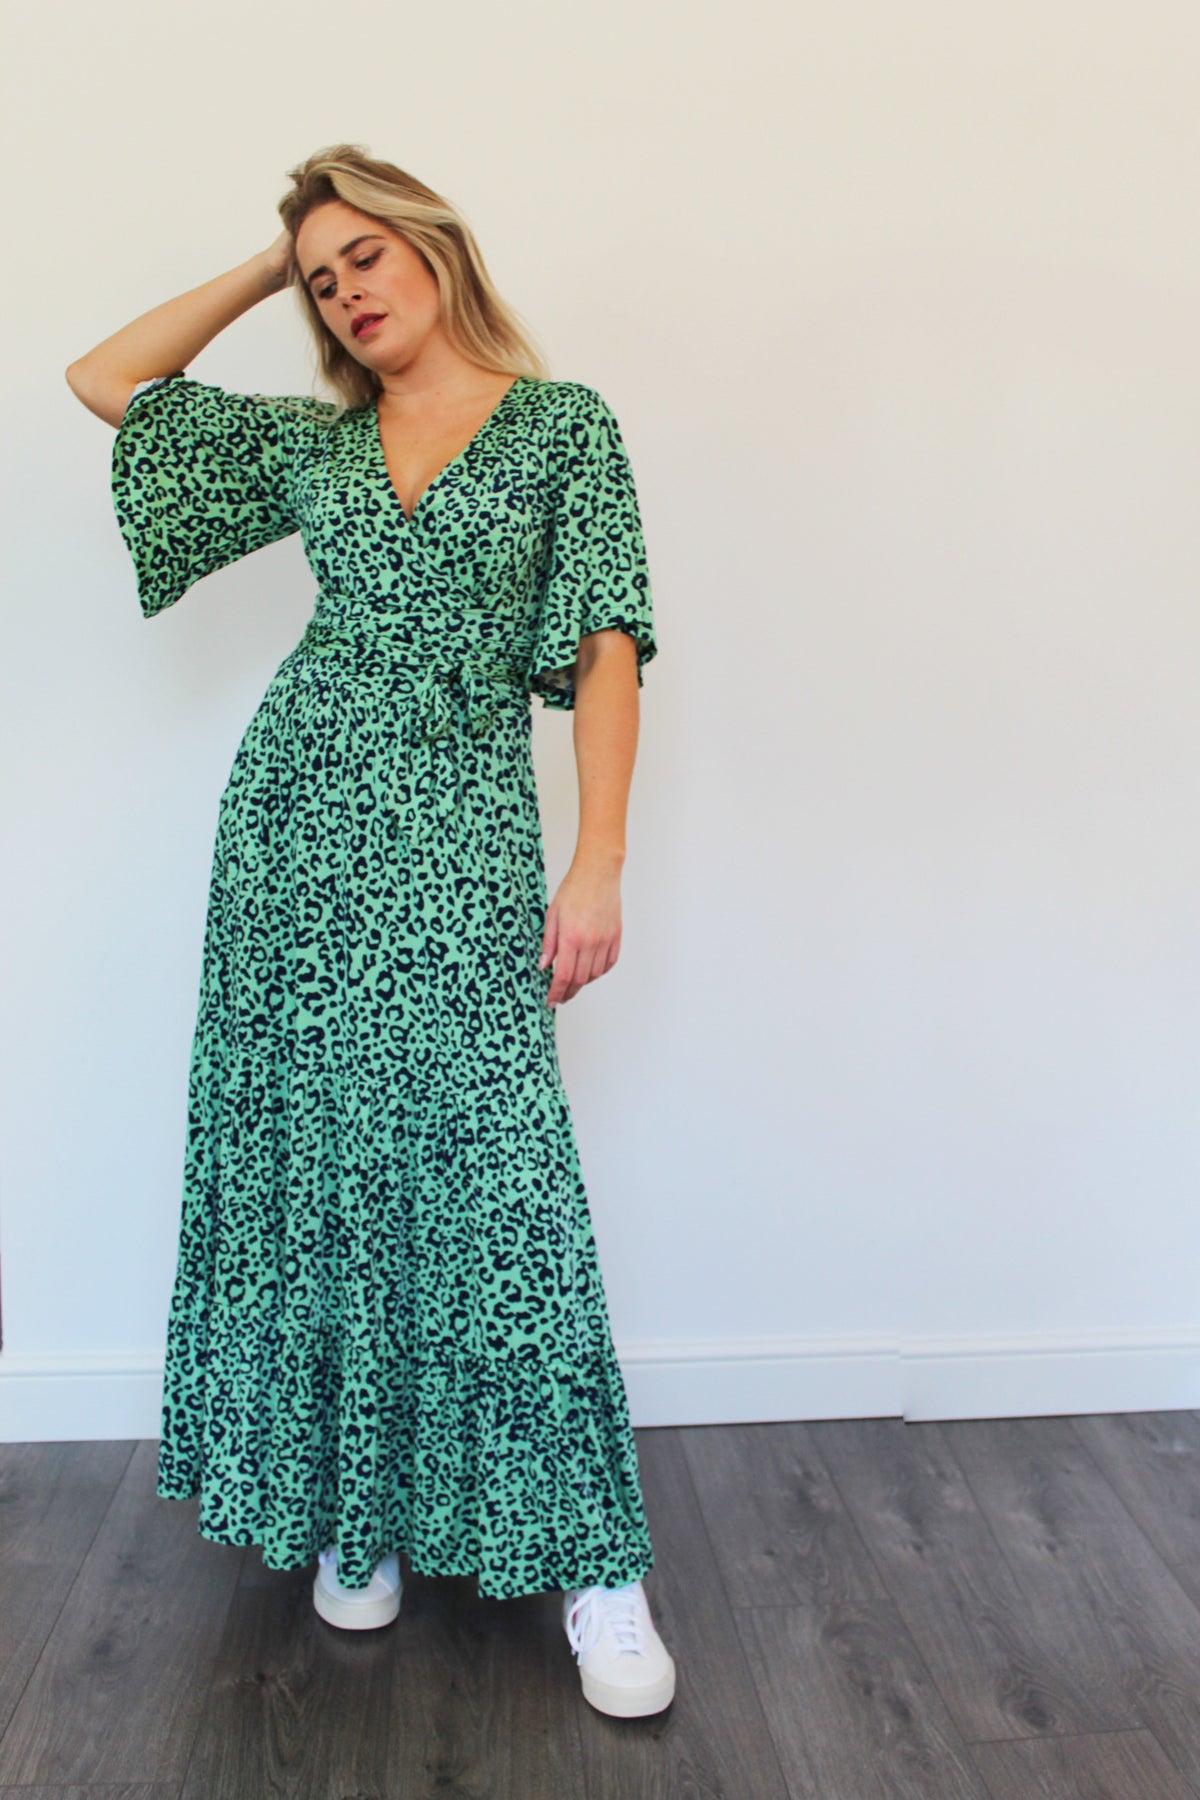 ONJENU Tilly Maxi Dress in Green Cheetah